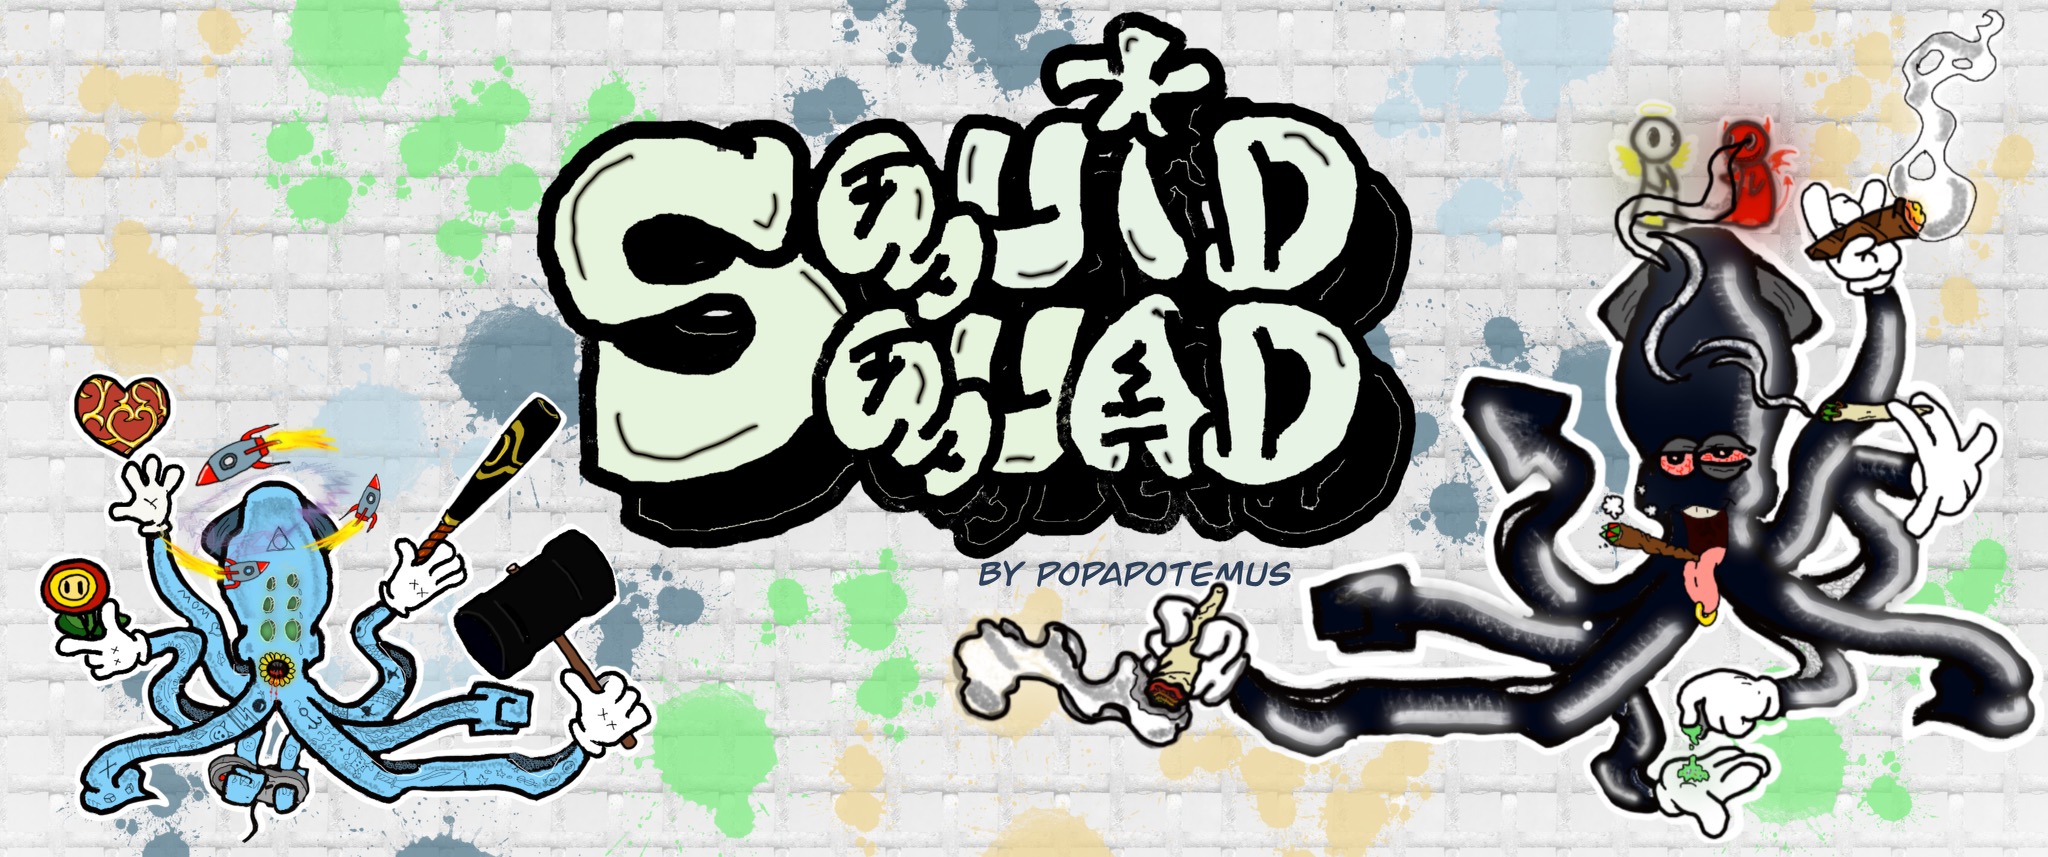 Squid_Squad_Deployer banner